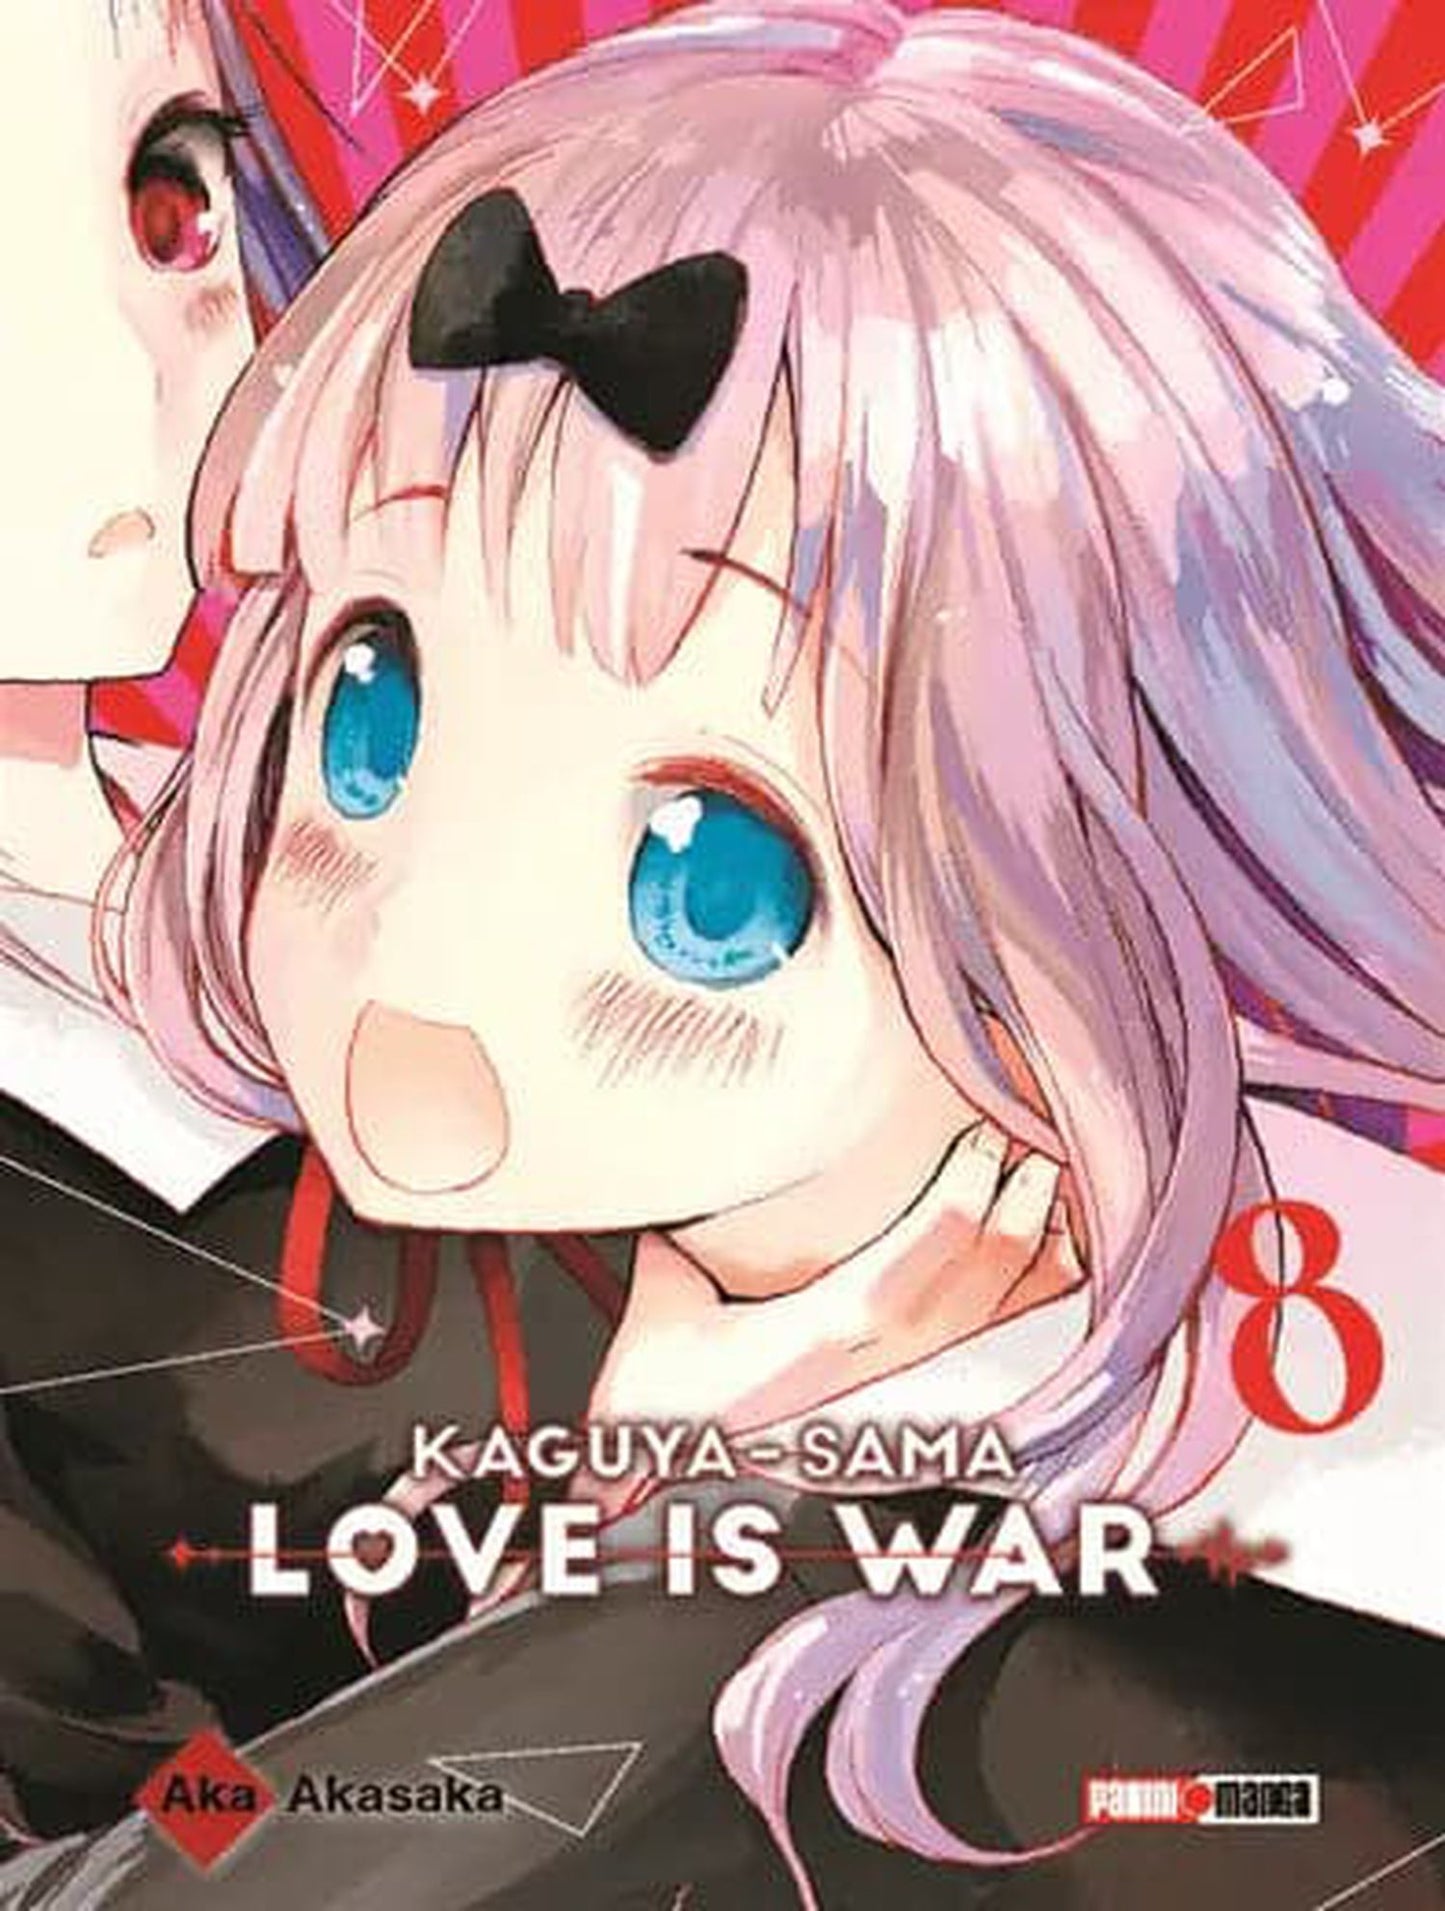 Kaguya-Sama: Love Is War - #8 Panini Argentina ENcuadrocomics